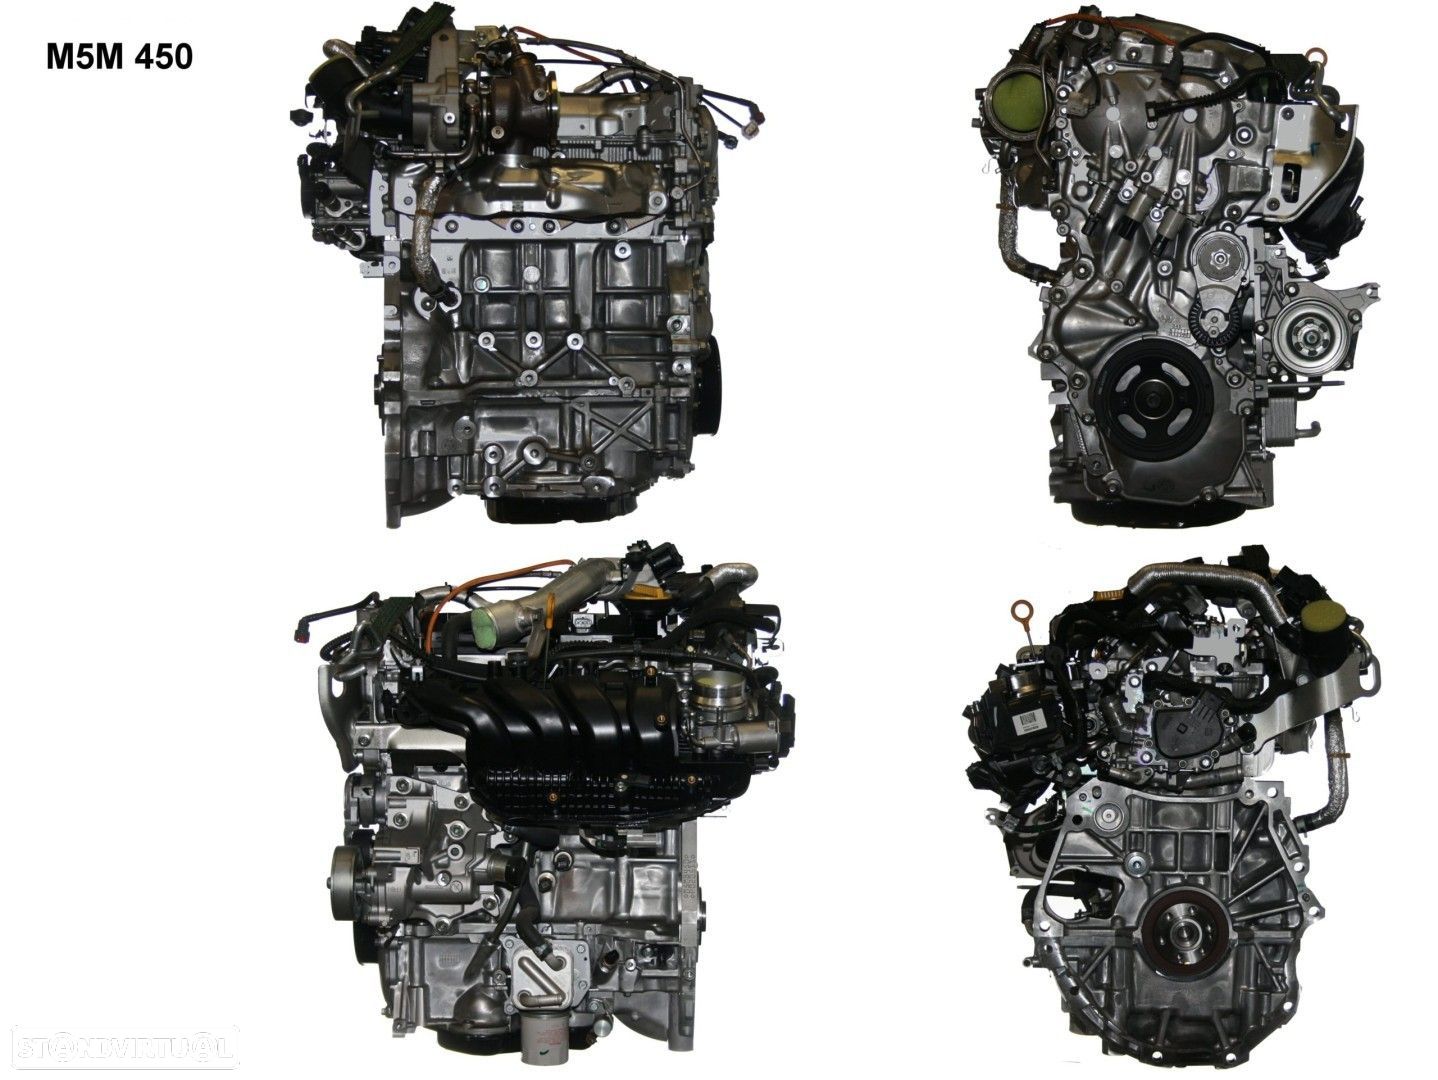 Motor Completo  Novo RENAULT ESPACE 1.6 TCe M5M 450 - 1